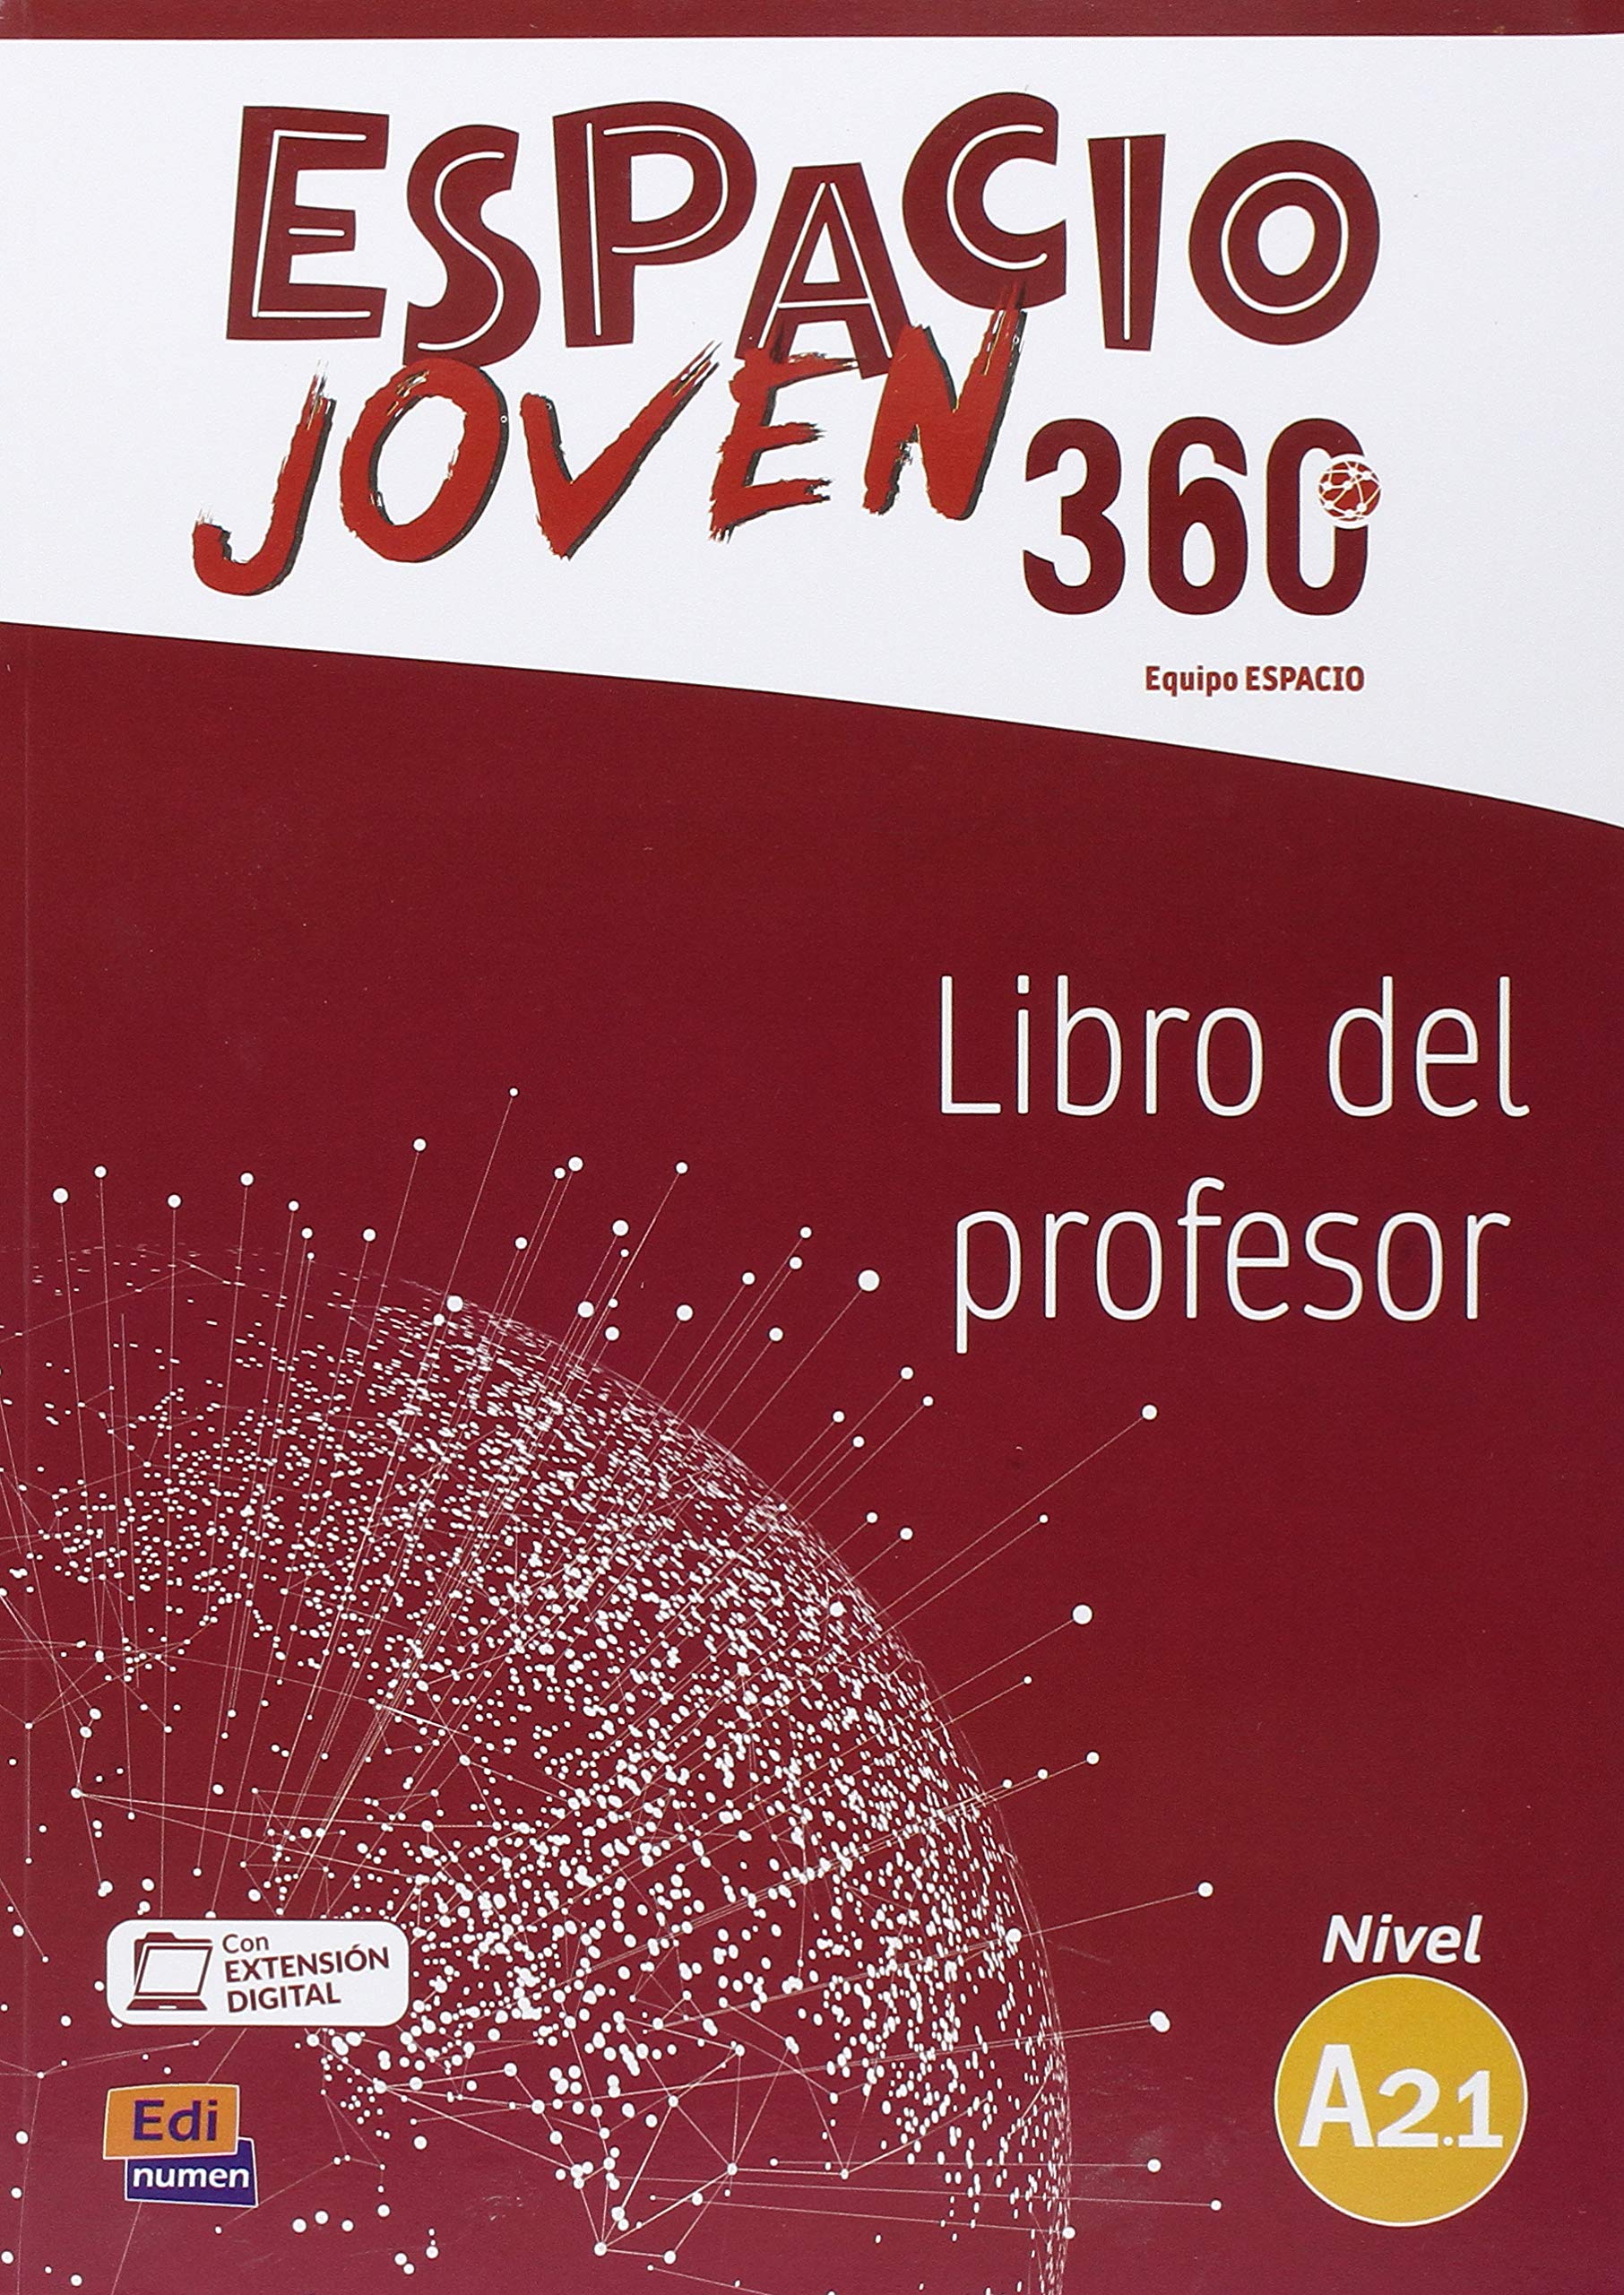 ESPACIO JOVEN 360 Nivel A 2.1 Libro del profesor